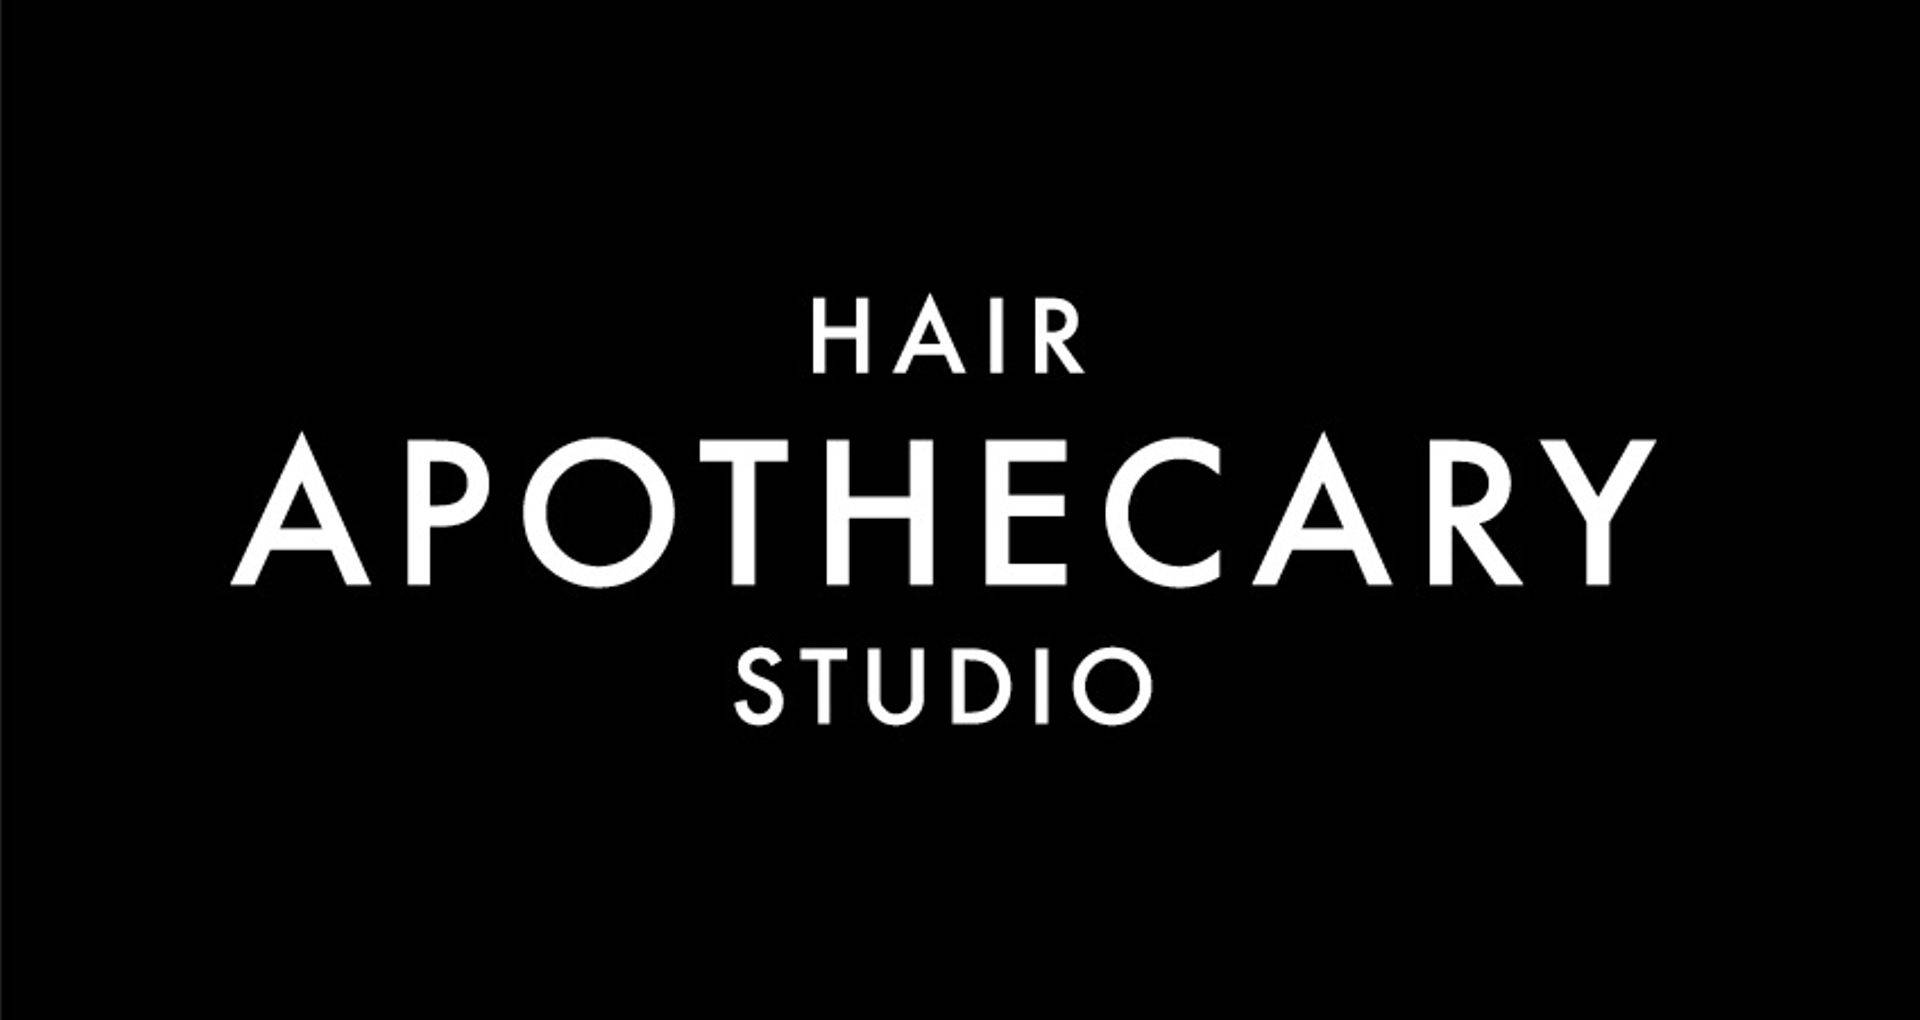 Hair Apothecary Studio